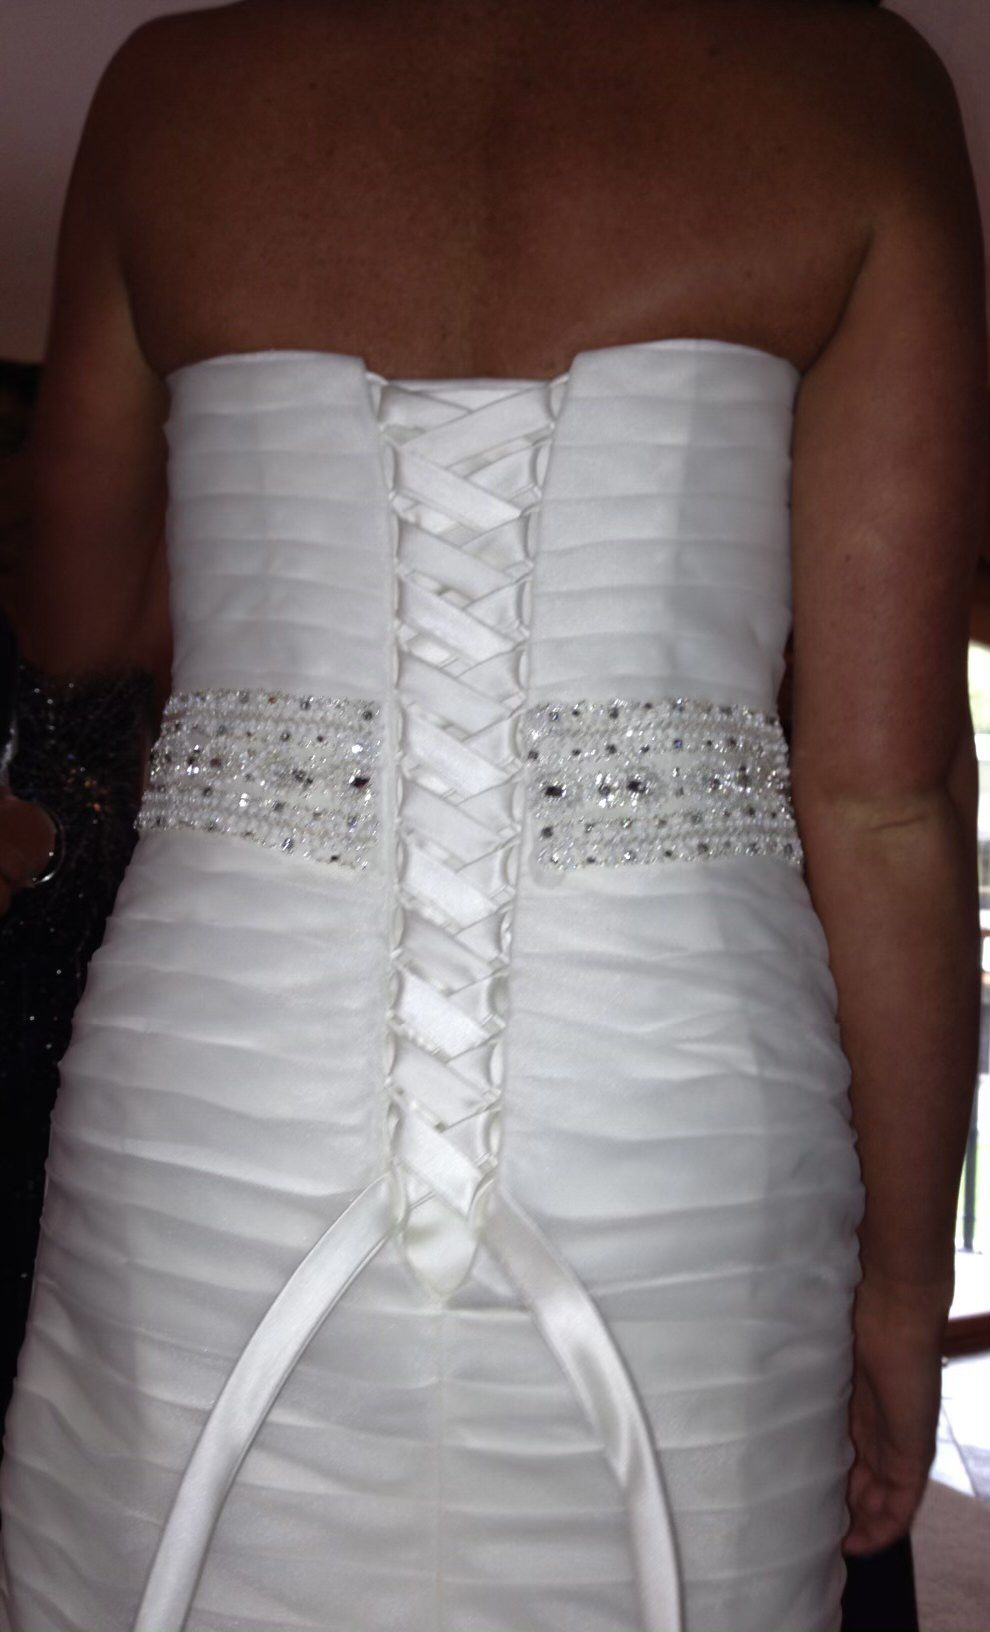 Size 10 Wedding Strapless White Mermaid Dress on Queenly